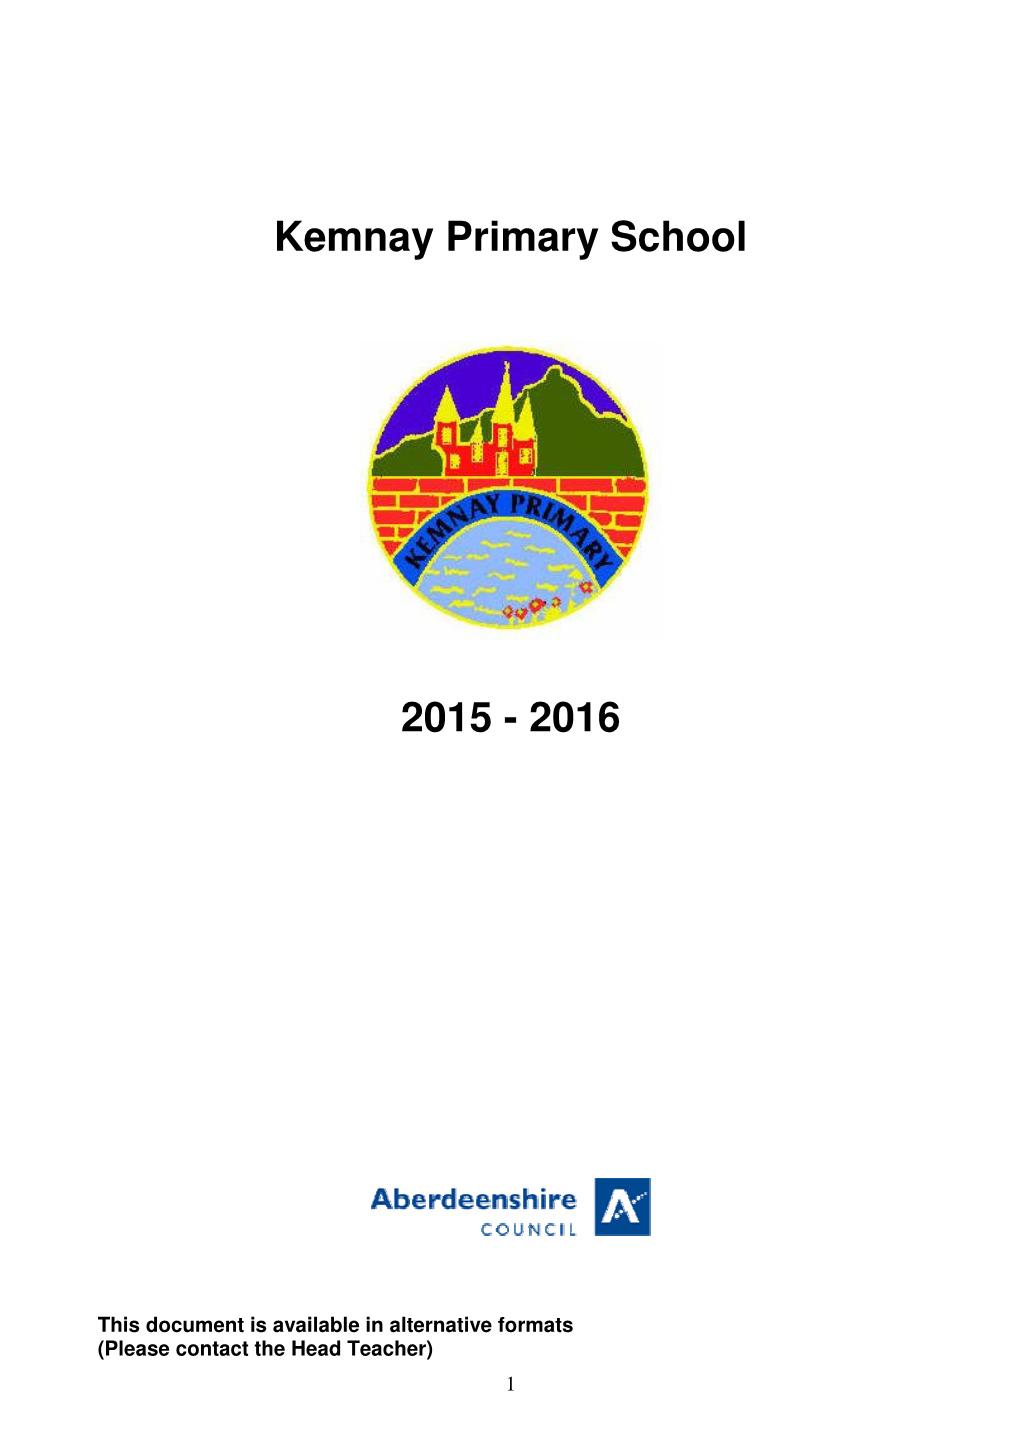 Kemnay Primary School 2015